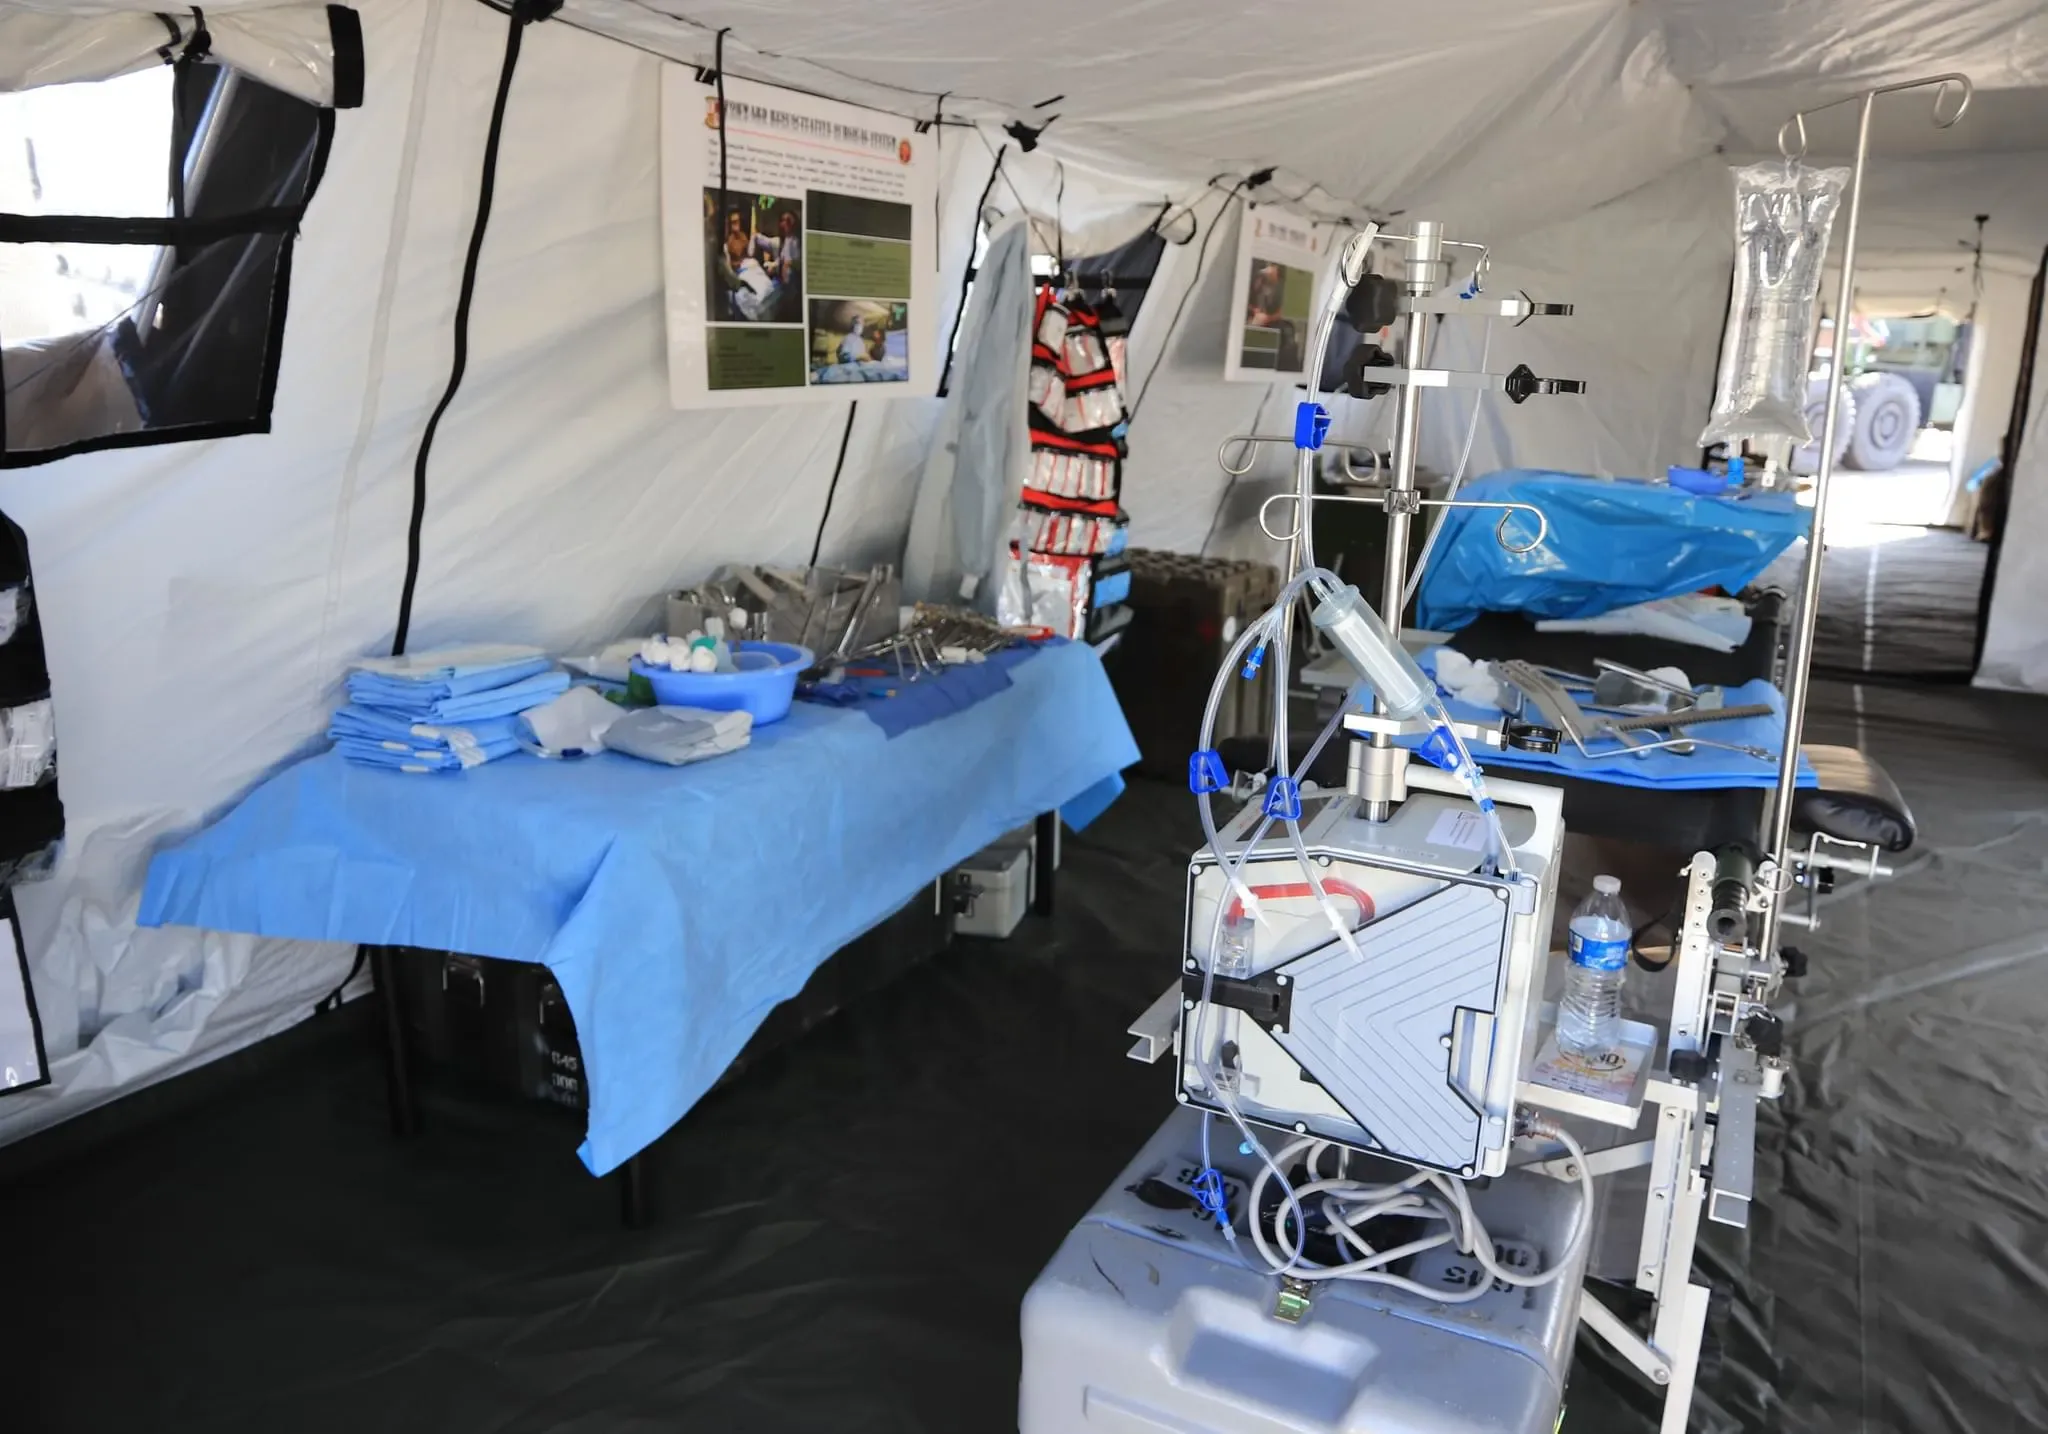 47 photos of Field Hospital Tent